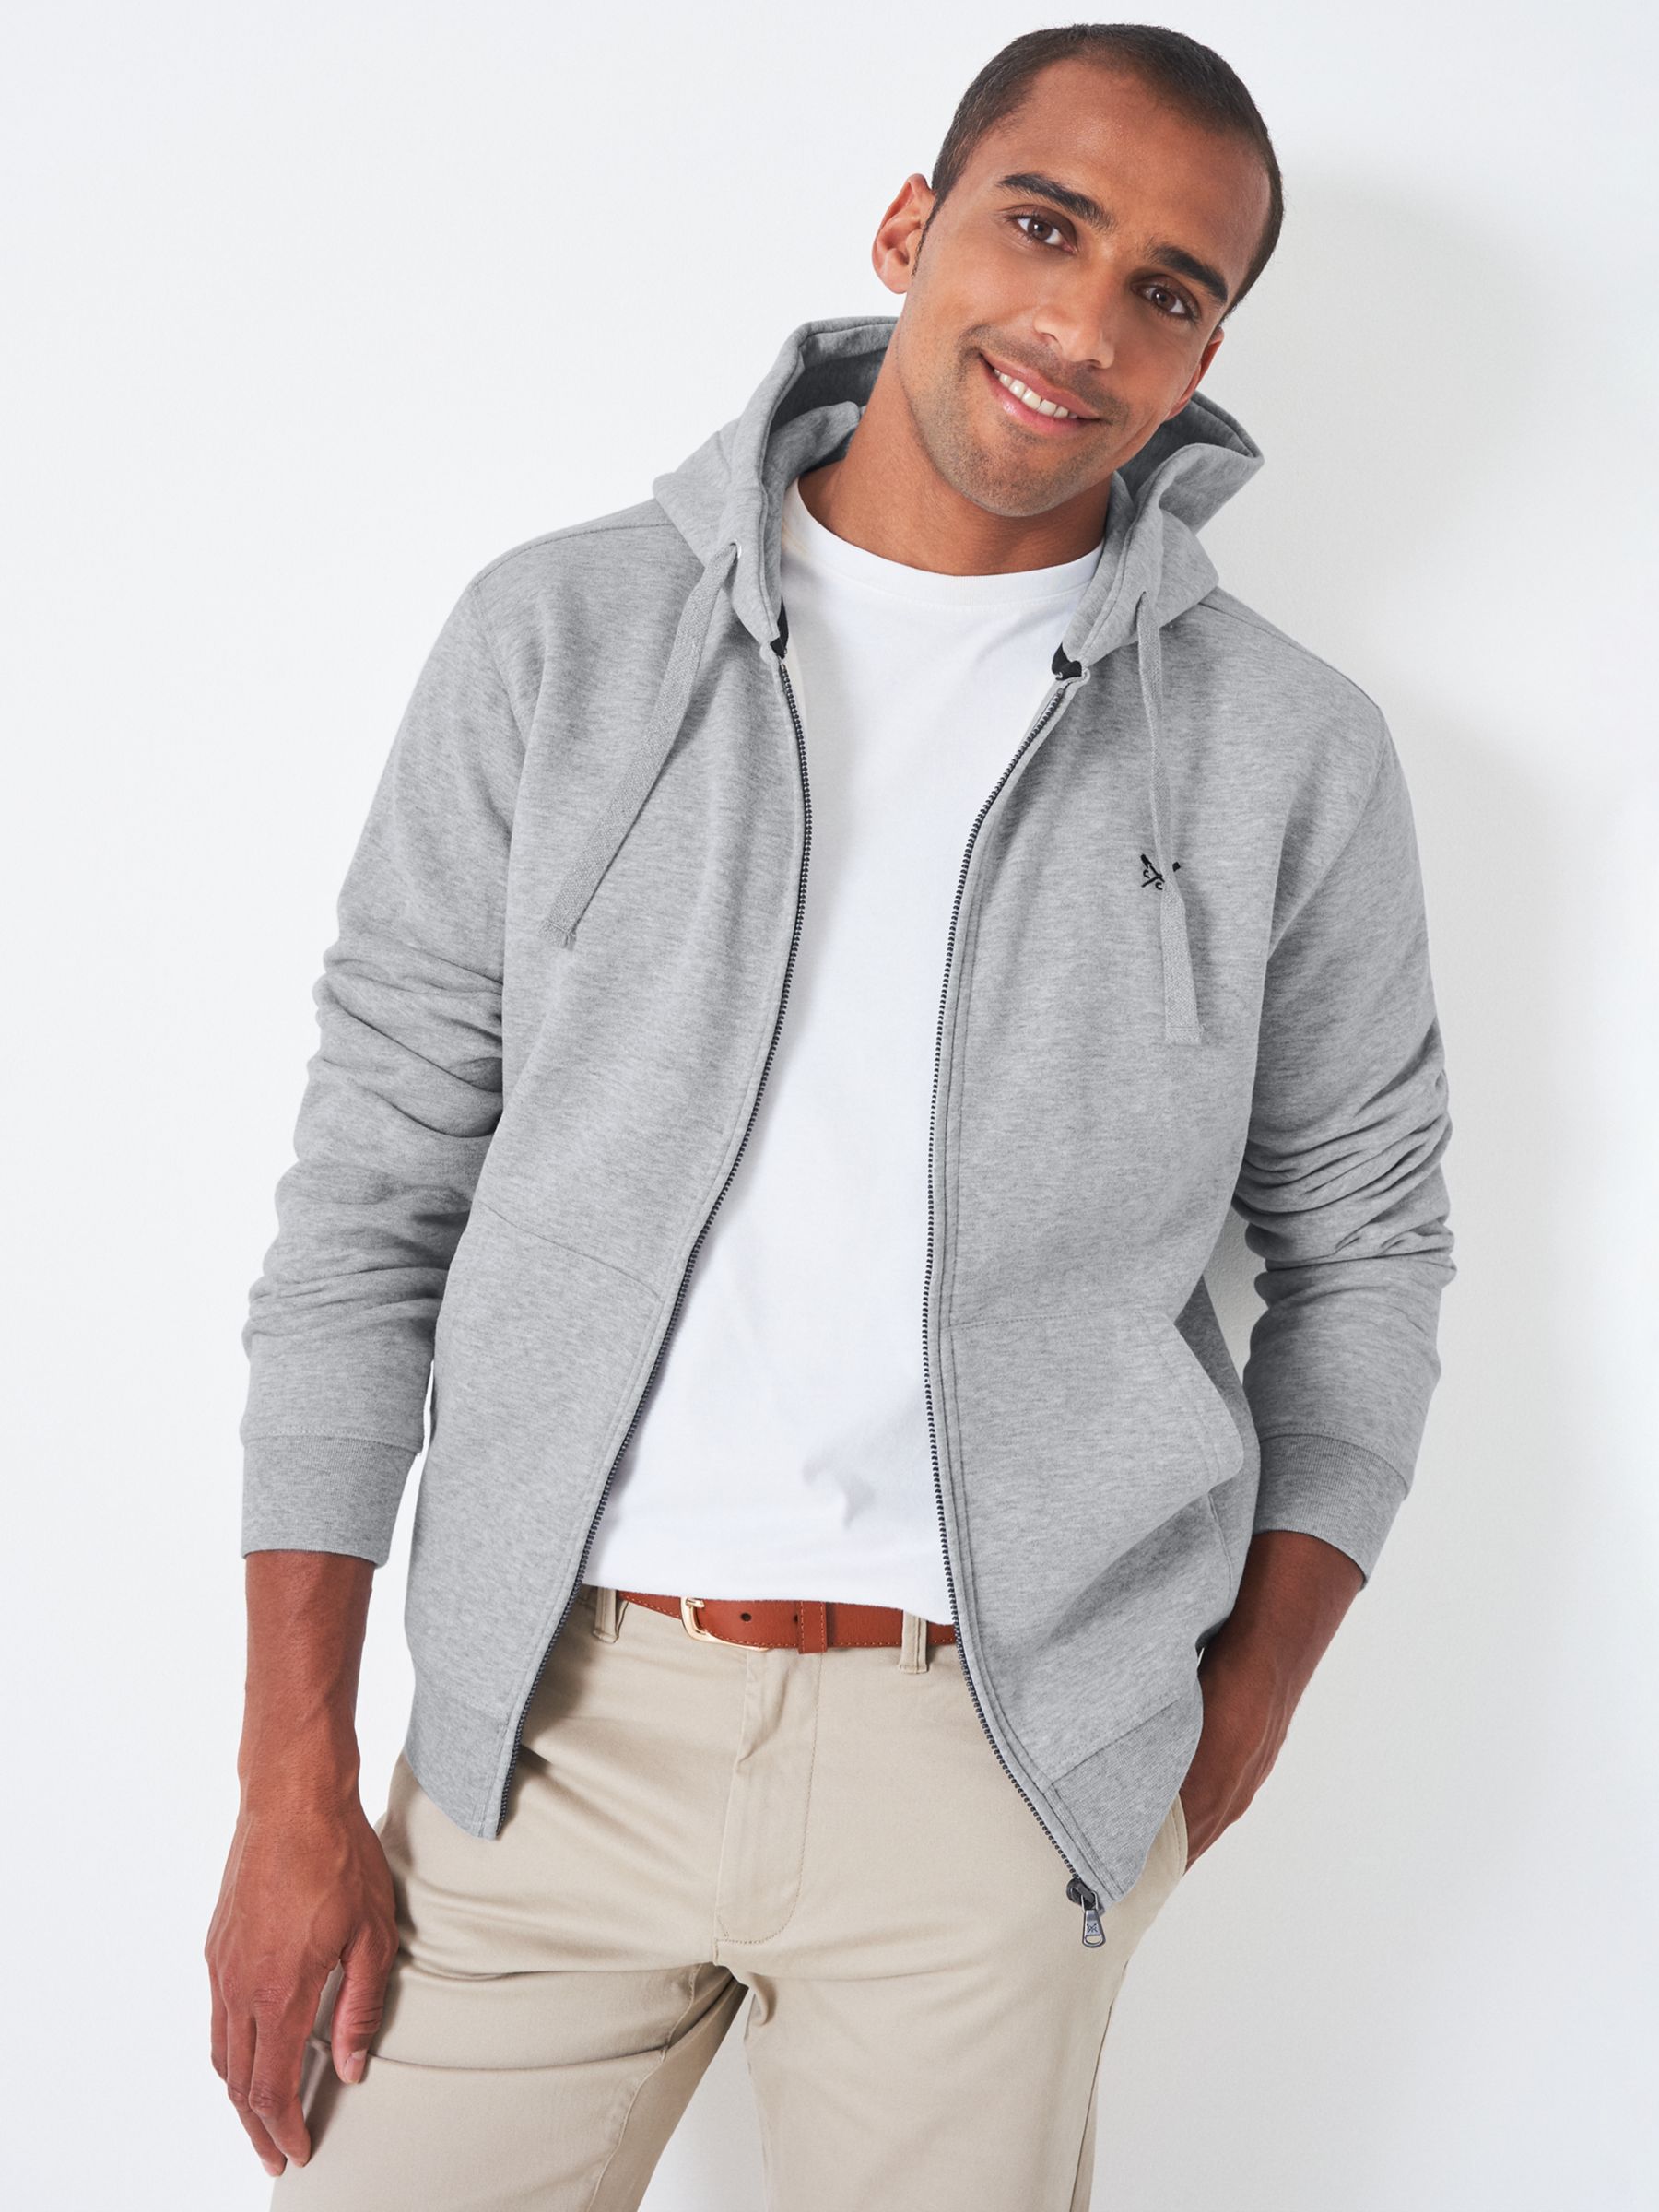 Men Lightweight Hoodies Zip Up Casual Hooded Coat with Zip Pockets Full Zip  Slim Fit Sweatshirt Sport Jacket Athletic Outwear Grey Small at  Men's  Clothing store